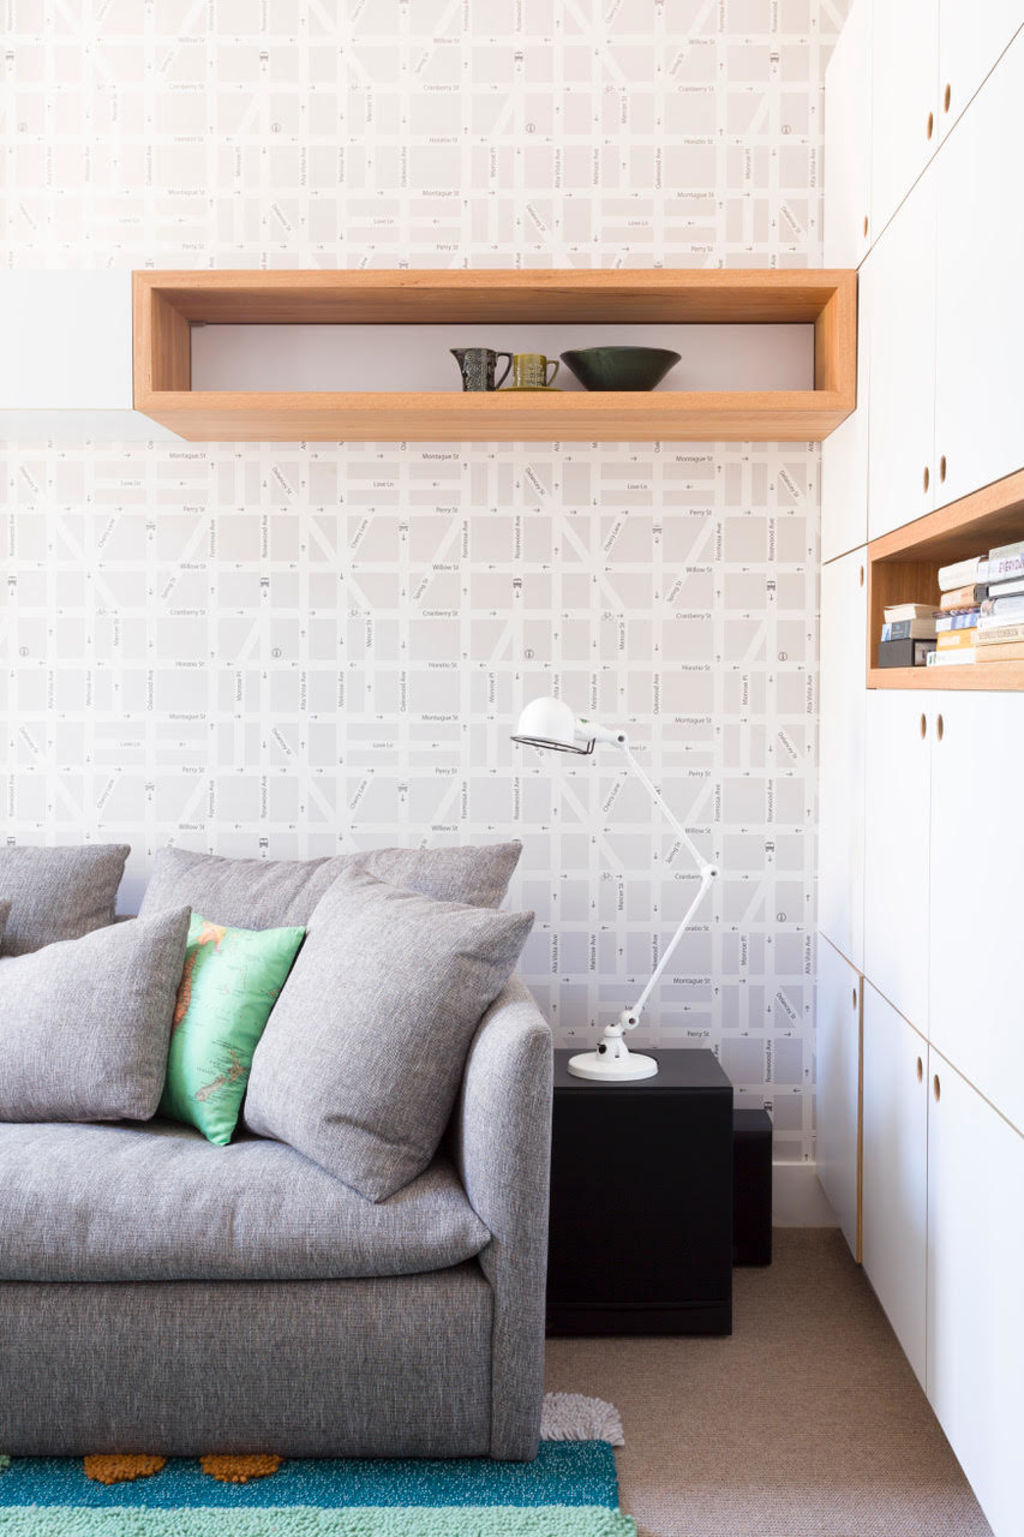 Wallpaper is a simple way to introduce patterns. Interior design: Petrina Turner Design. Styling: Megan Morton. Photo: Amorfo